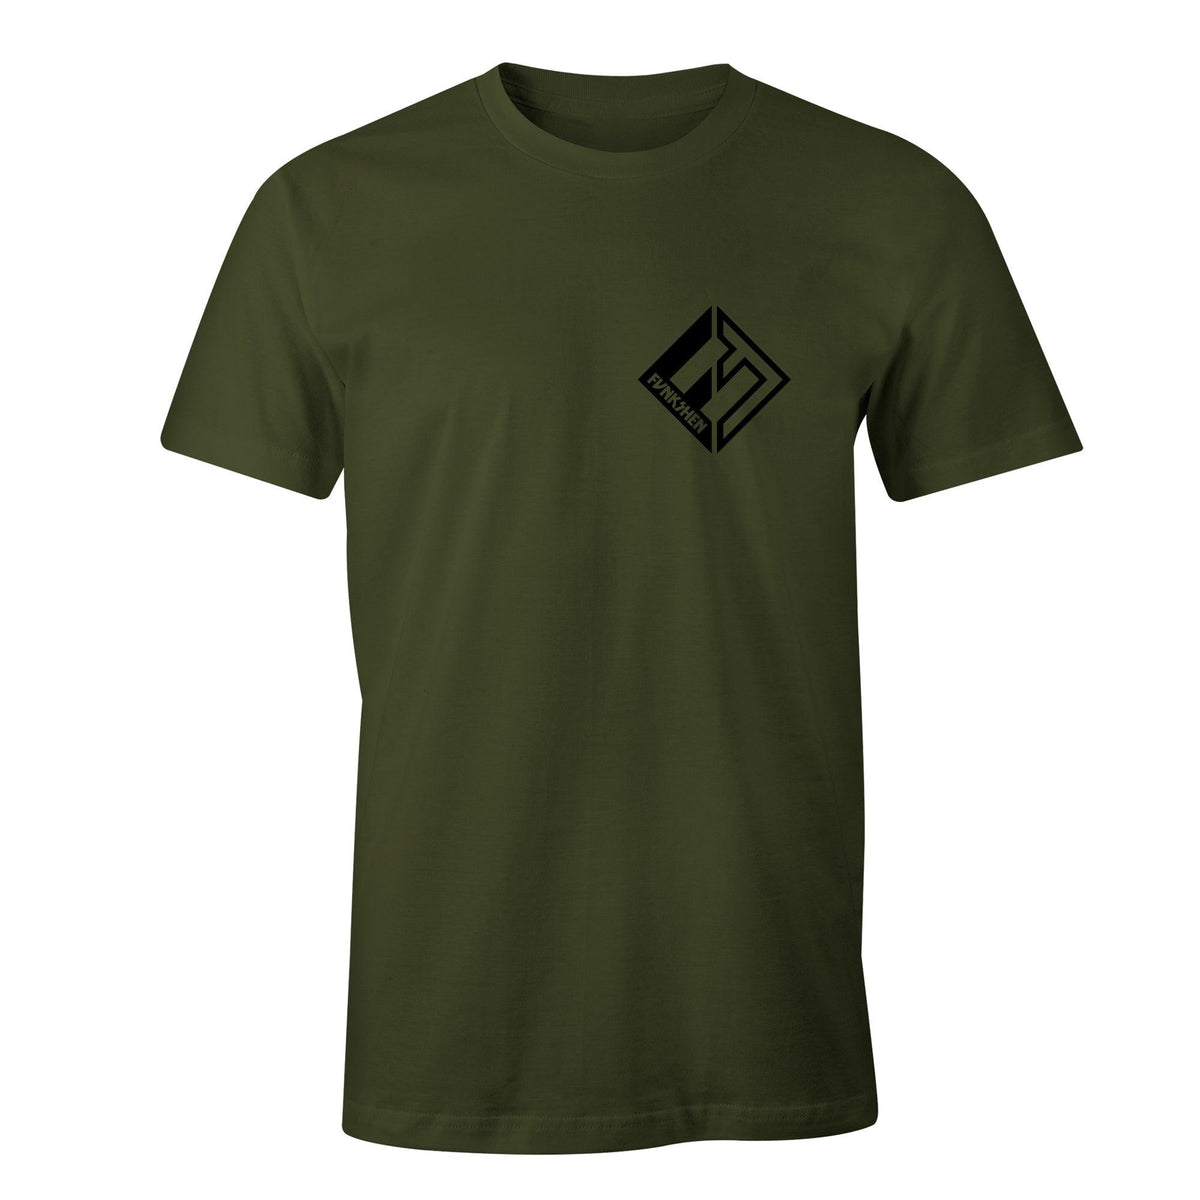 Funkshen KAOS T-Shirt - Army - Funkshen Bodyboards